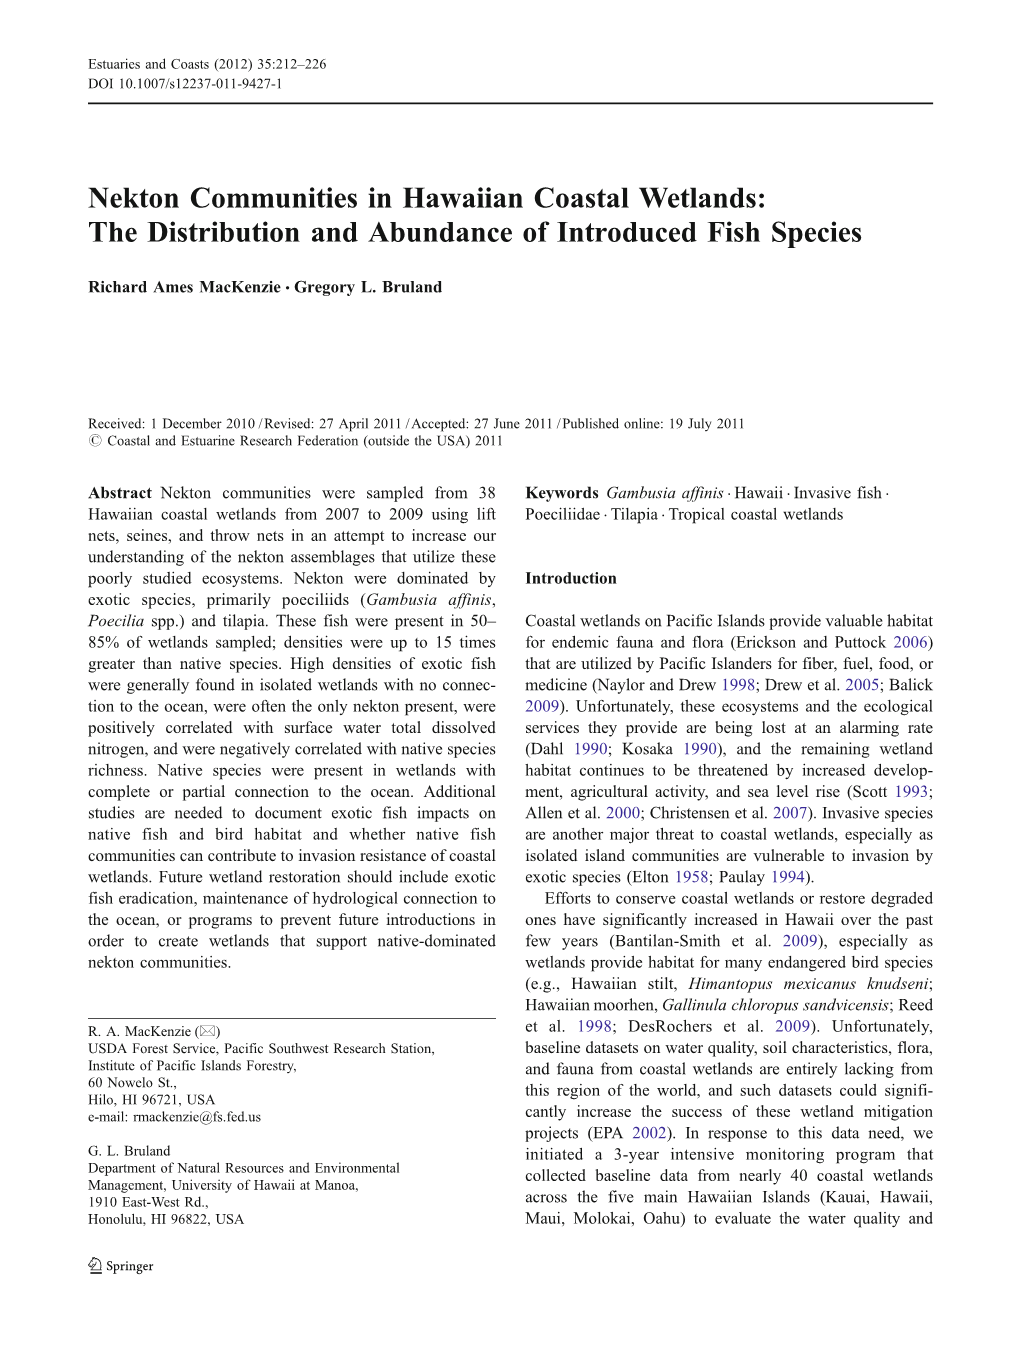 Nekton Communities in Hawaiian Coastal Wetlands: the Distribution and Abundance of Introduced Fish Species